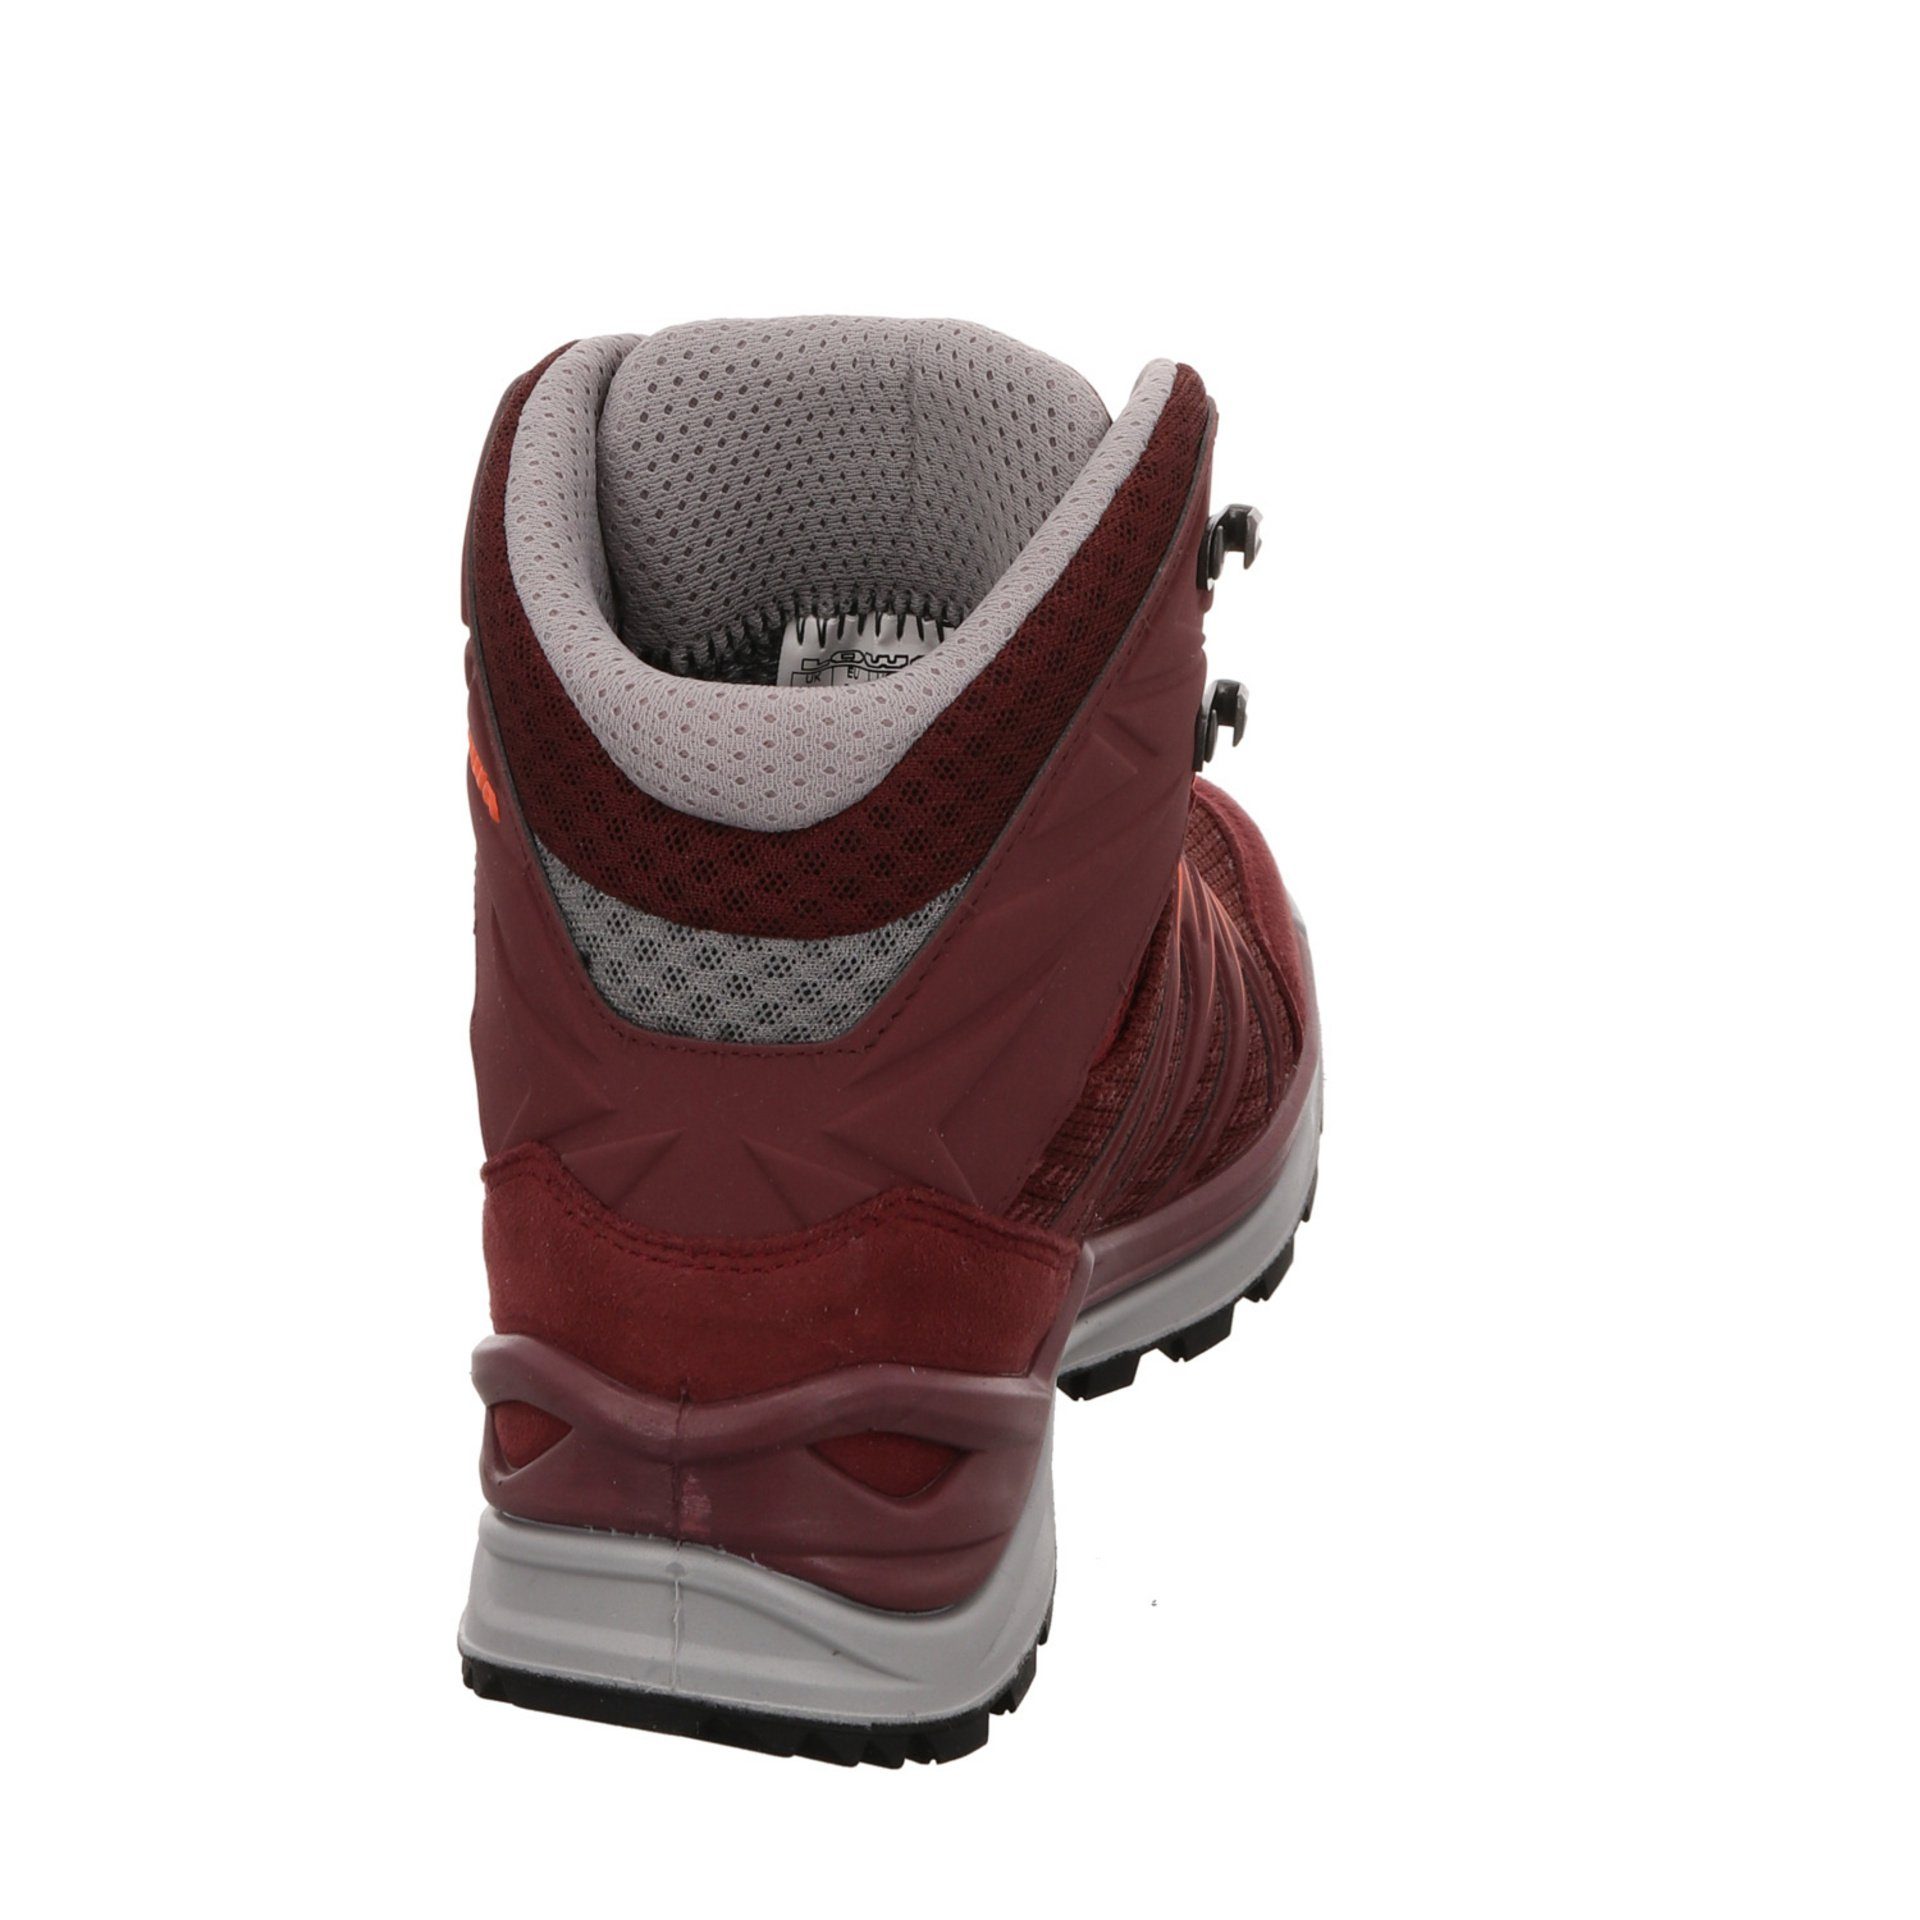 Lowa Damen Synthetikkombination Outdoor BORDEAUX/KORALLE Outdoorschuh Schuhe